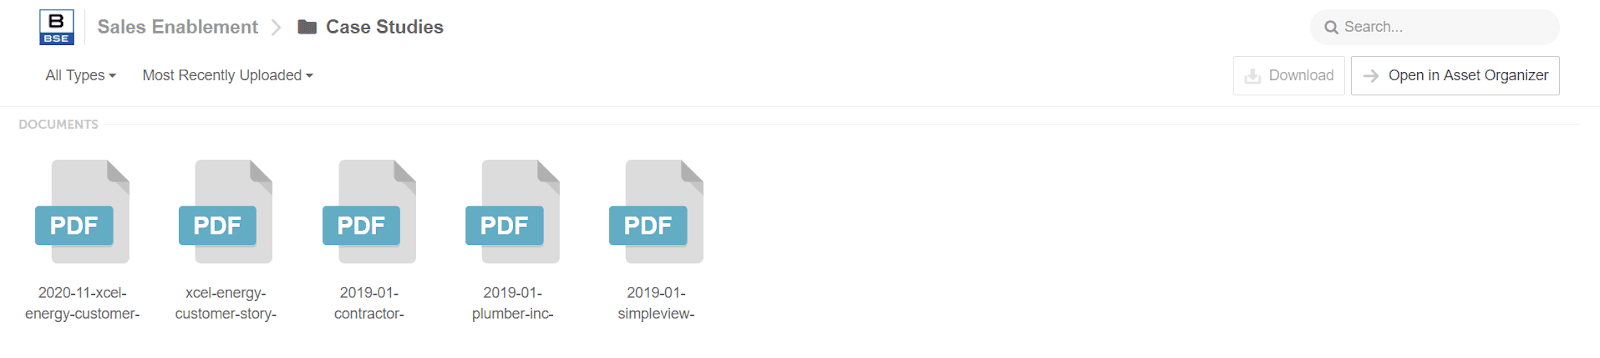 A single internal team folder in asset organizer with PDF files